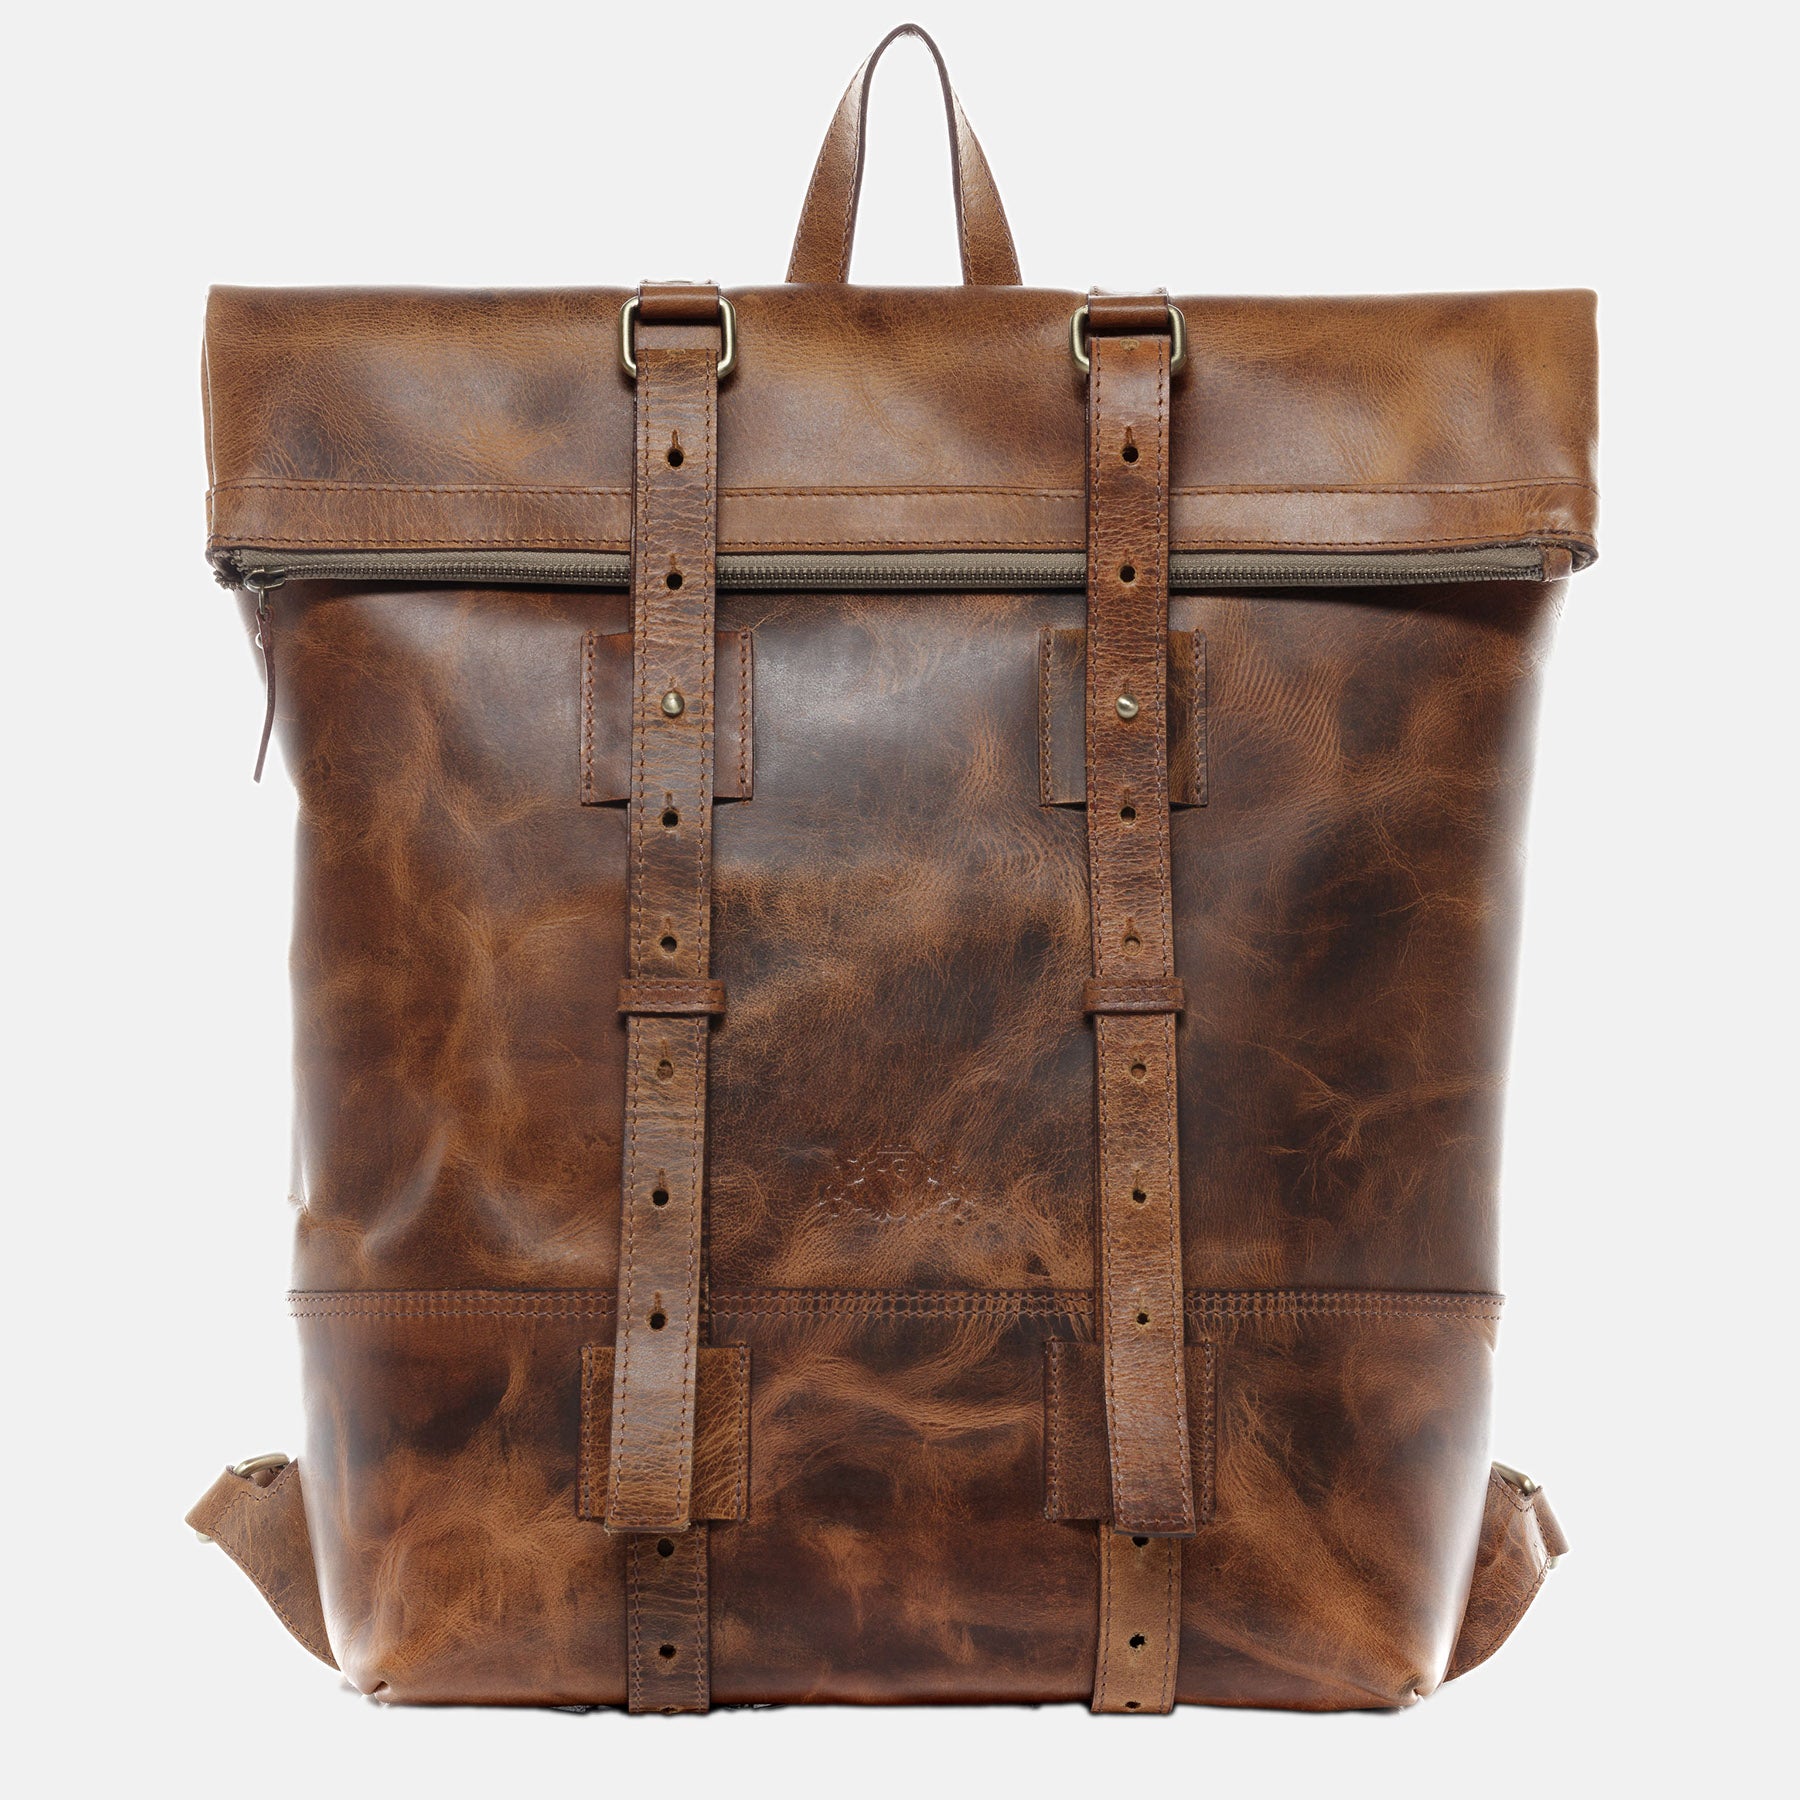 Rolltop backpack CHAZ buffalo leather camel beige